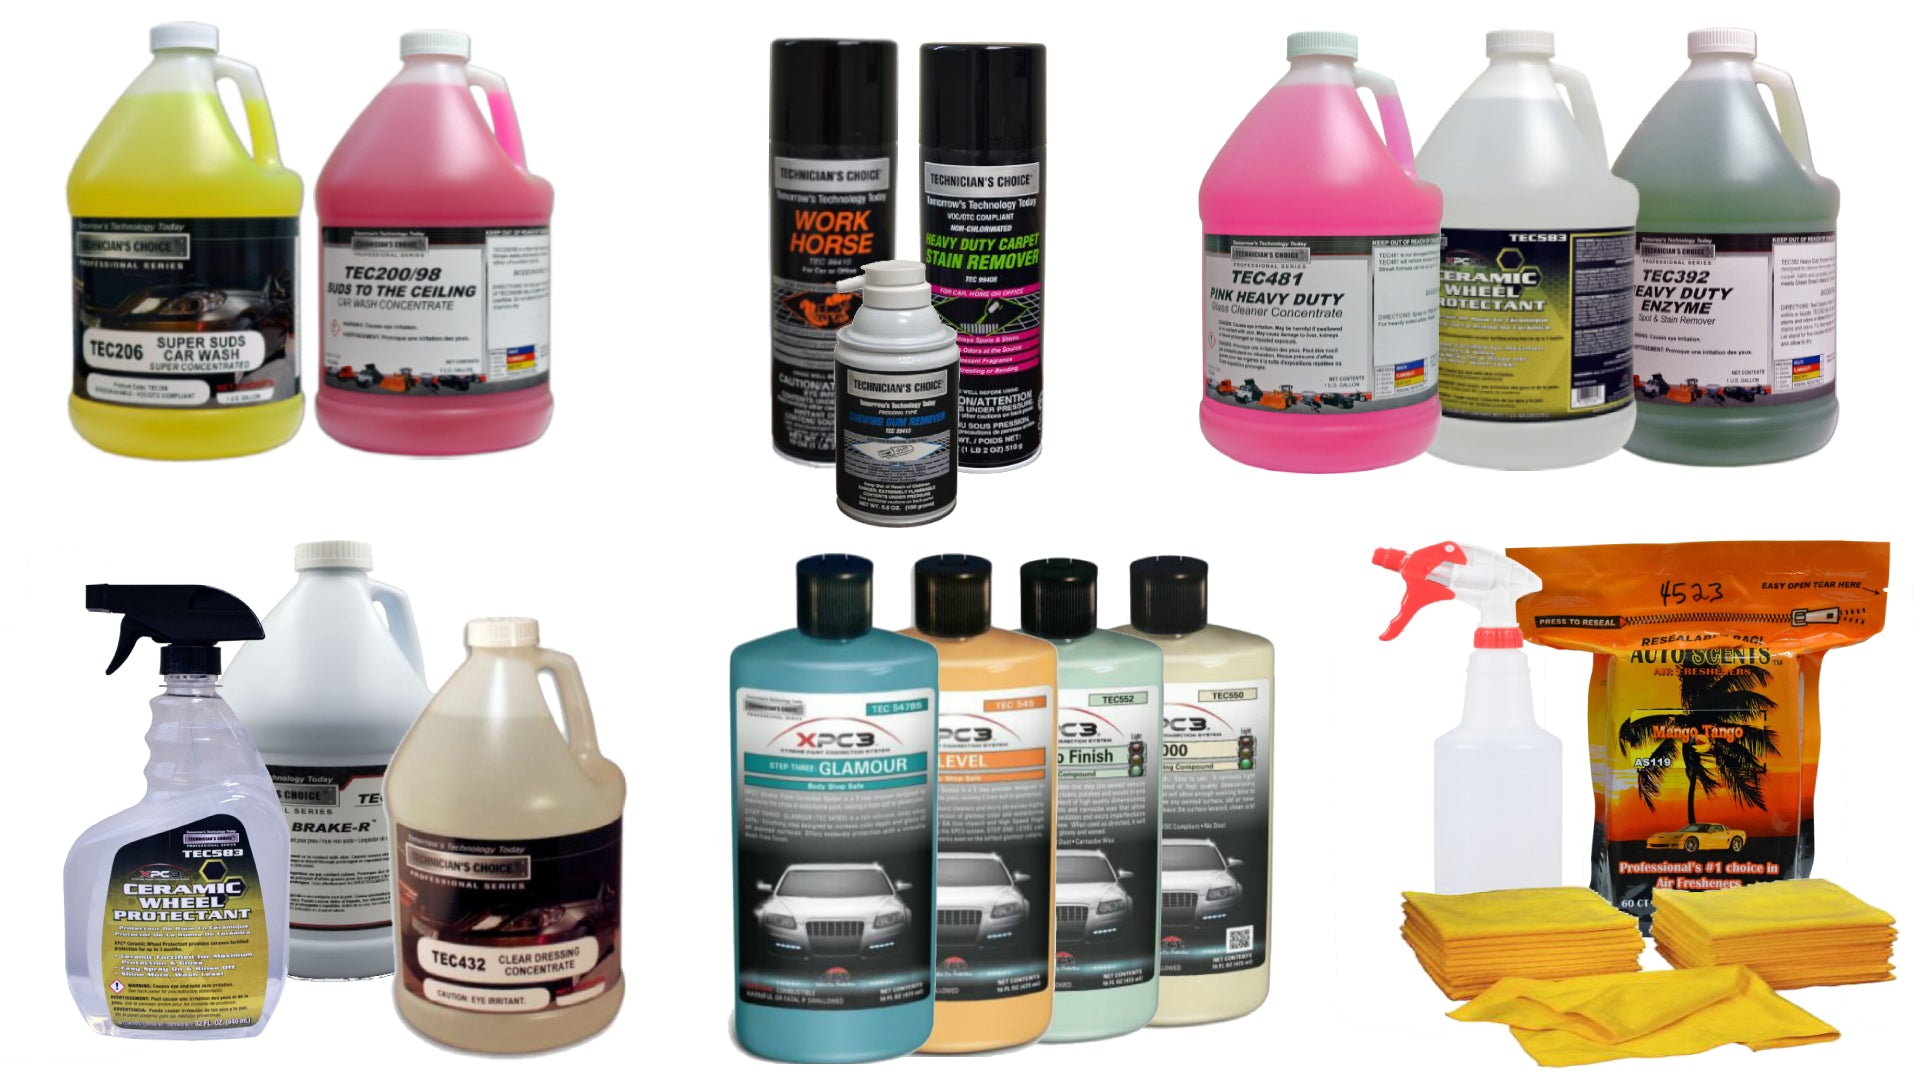 Premium Ceramic Detail Spray – Gloss It Products